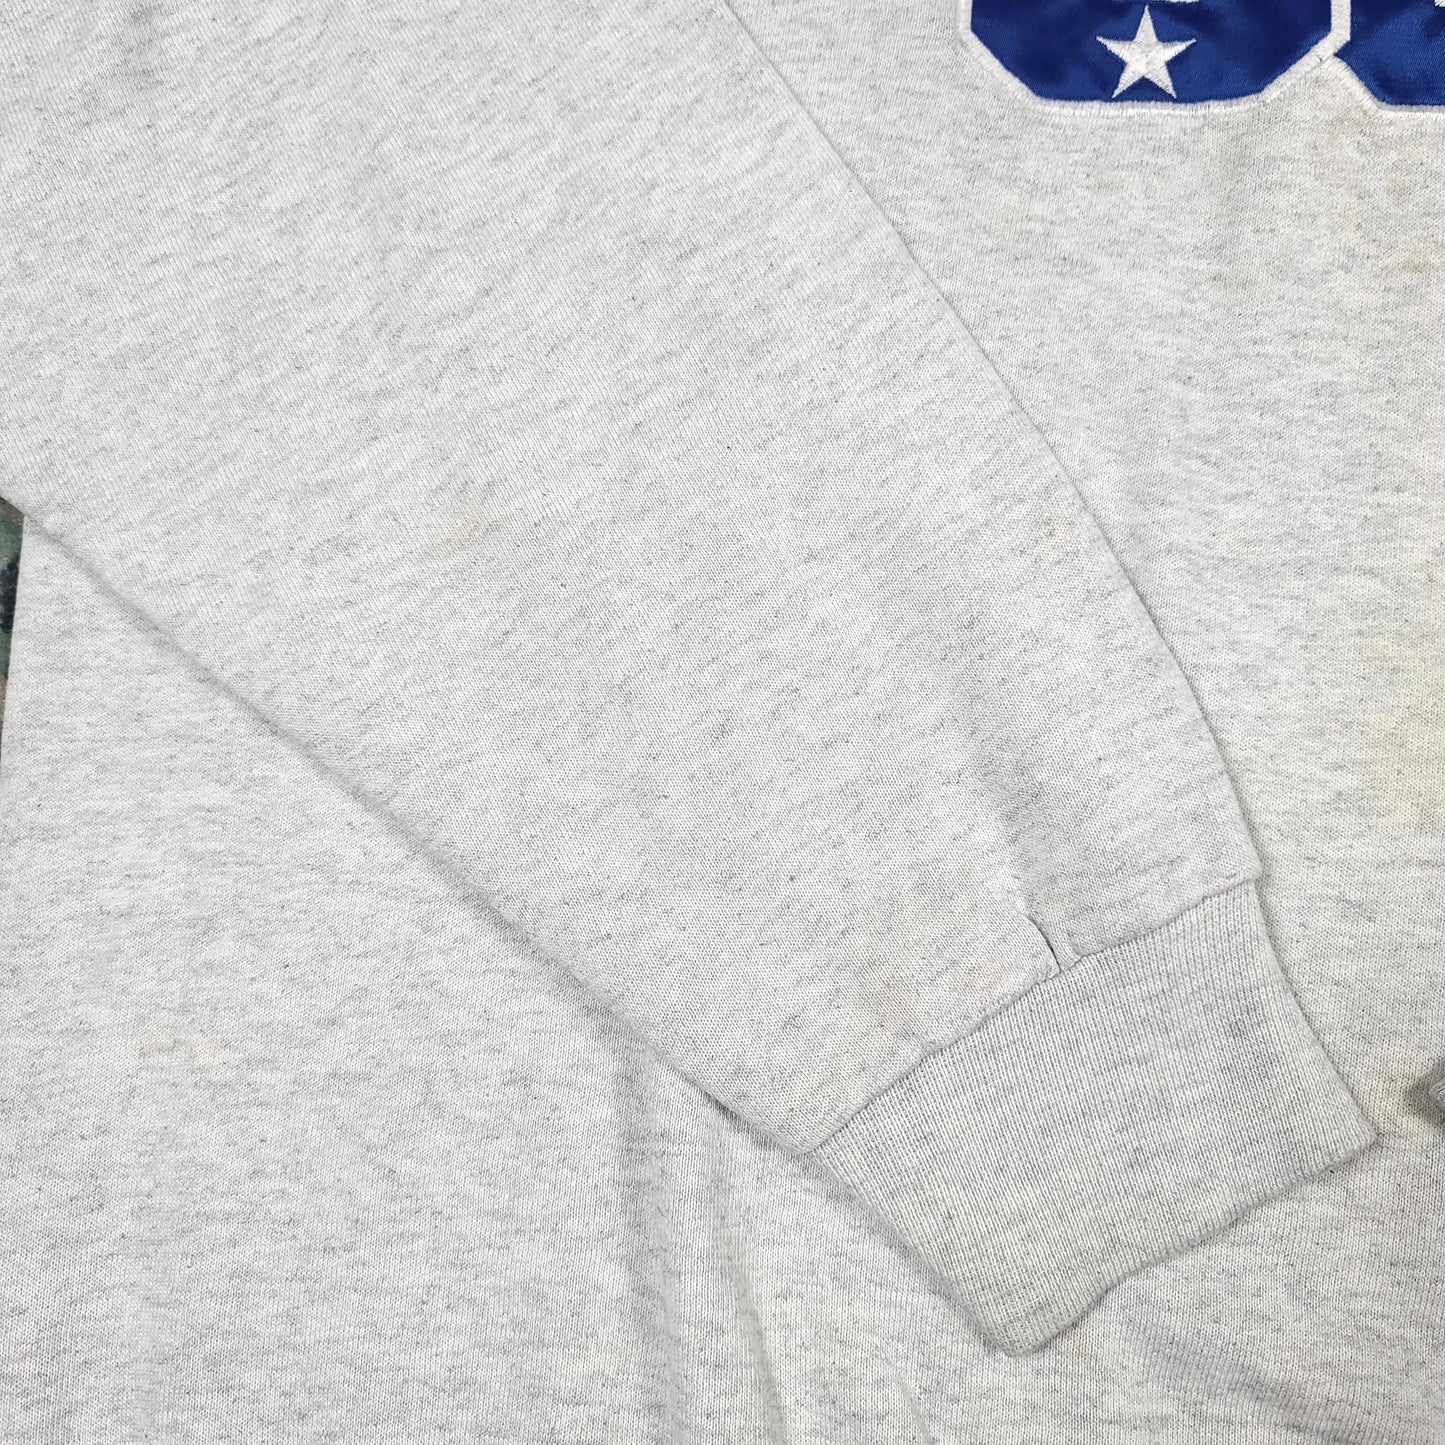 Vintage 90's Team USA Gray Sweatshirt